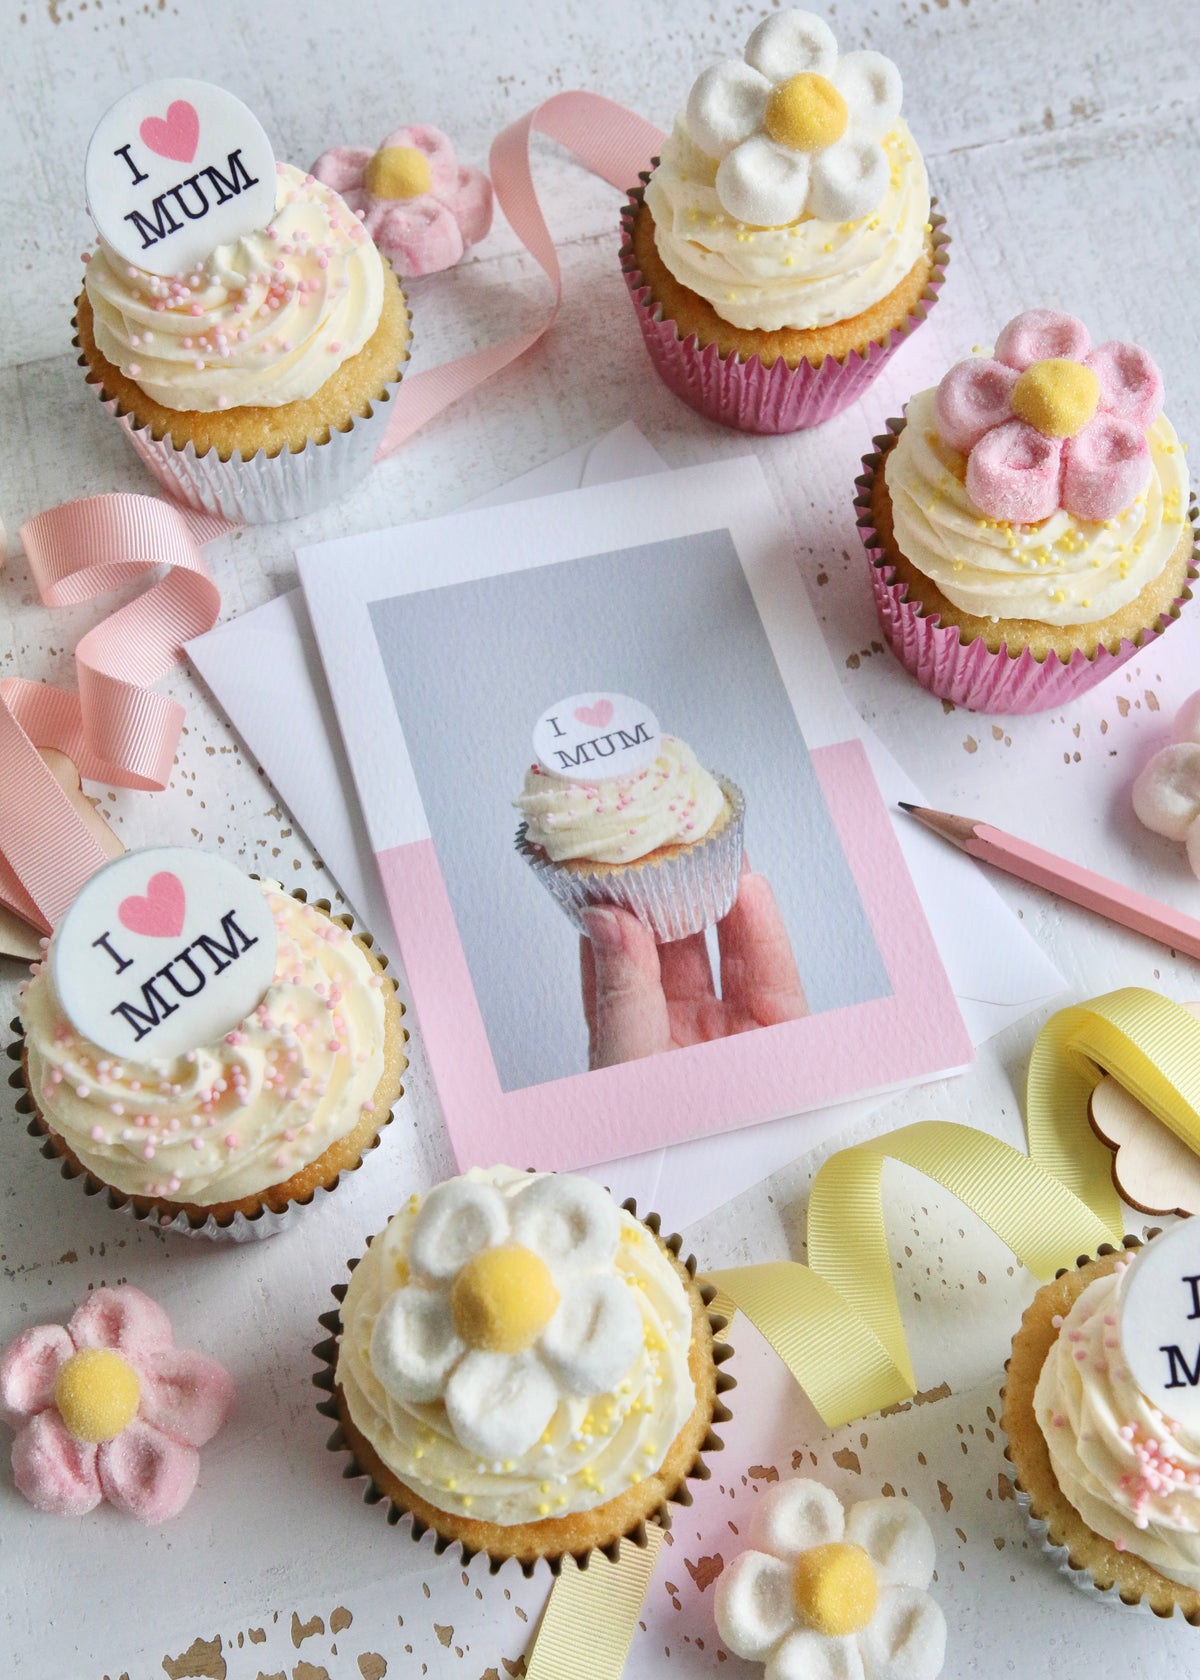 "I Heart Mum" Cupcake Photo Card